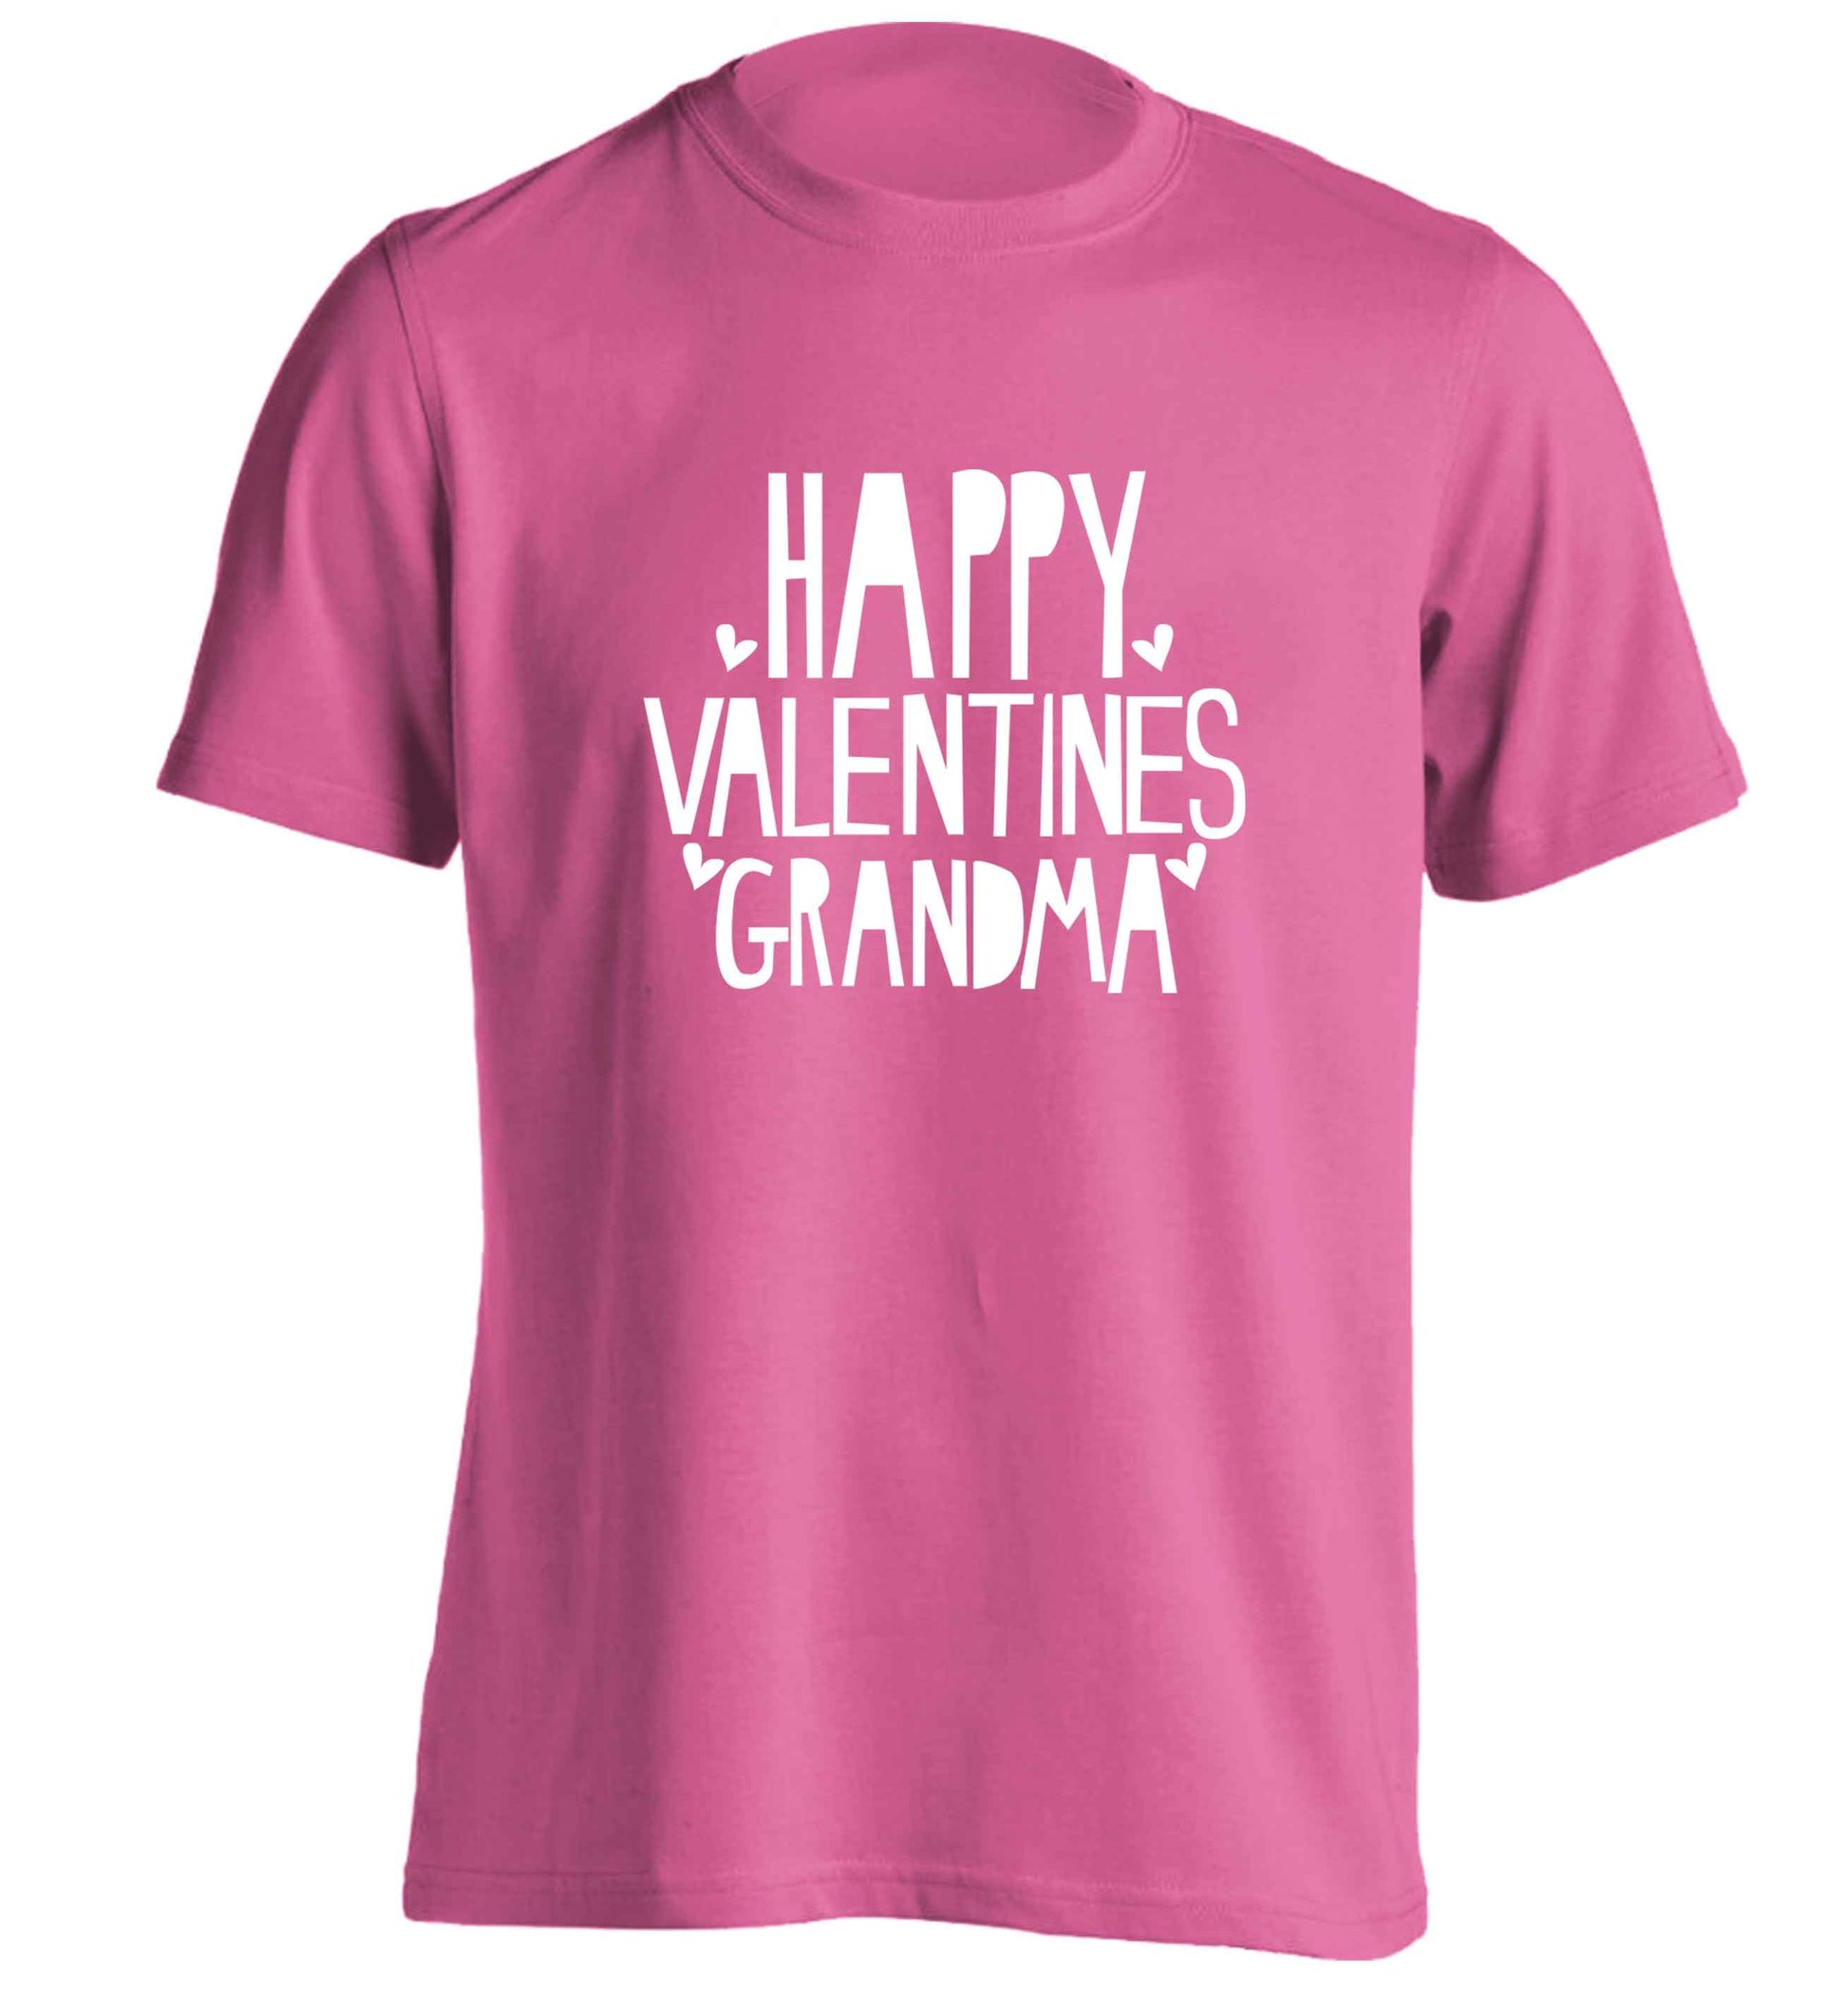 Happy valentines grandma adults unisex pink Tshirt 2XL